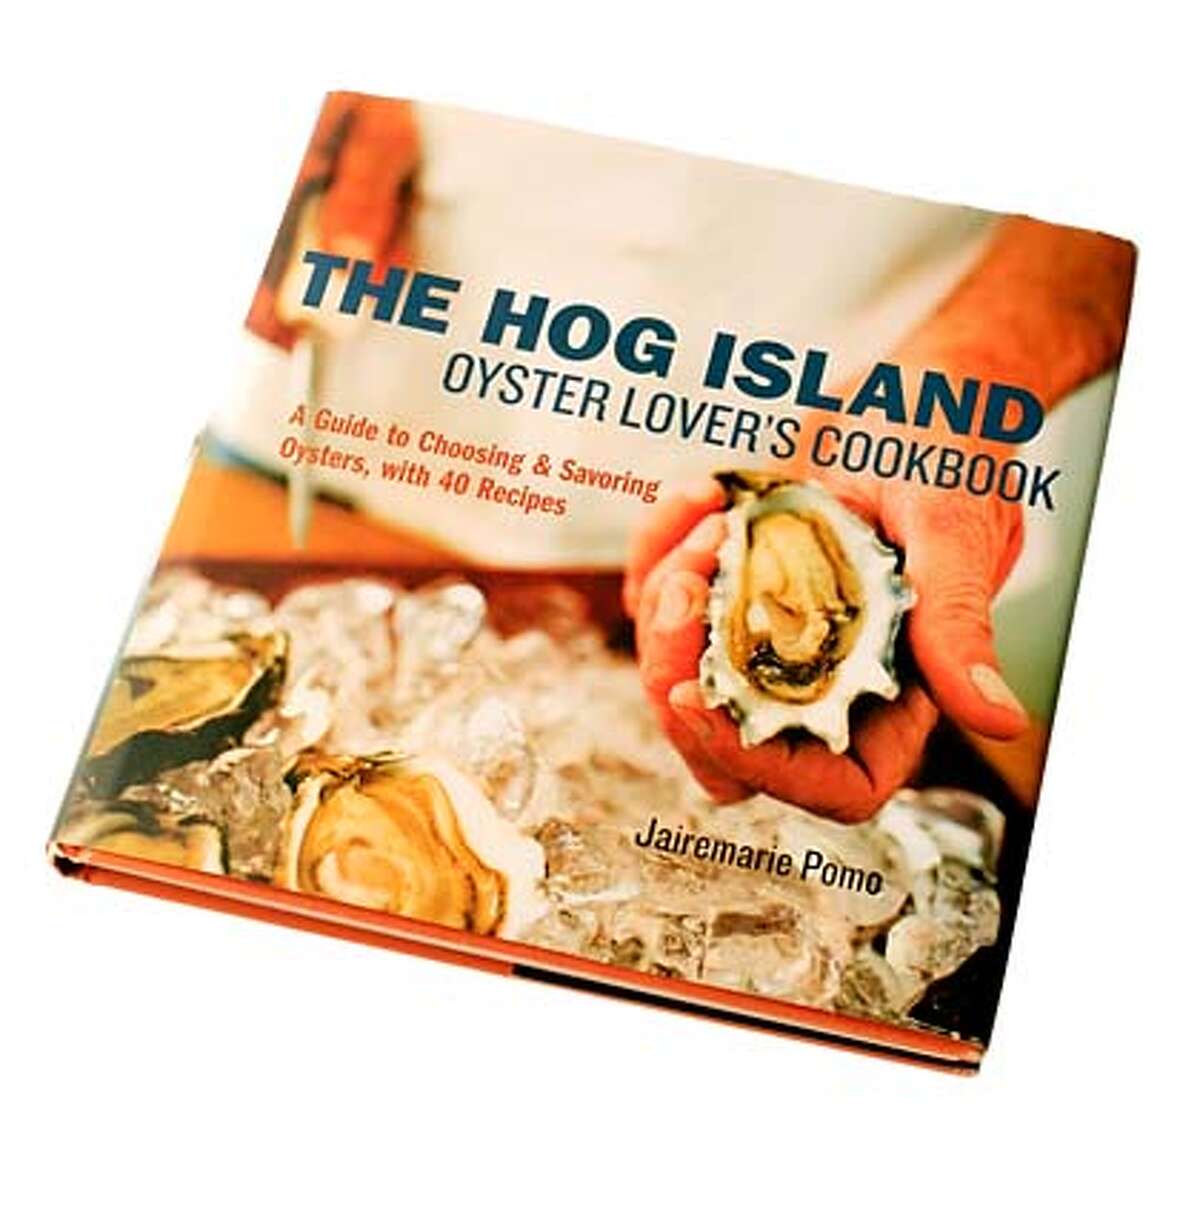 BOOK_HOG_ISLAND_JOHNLEE.JPG "The Hog Island Cook Book." By JOHN LEE/SPECIAL TO THE CHRONICLE